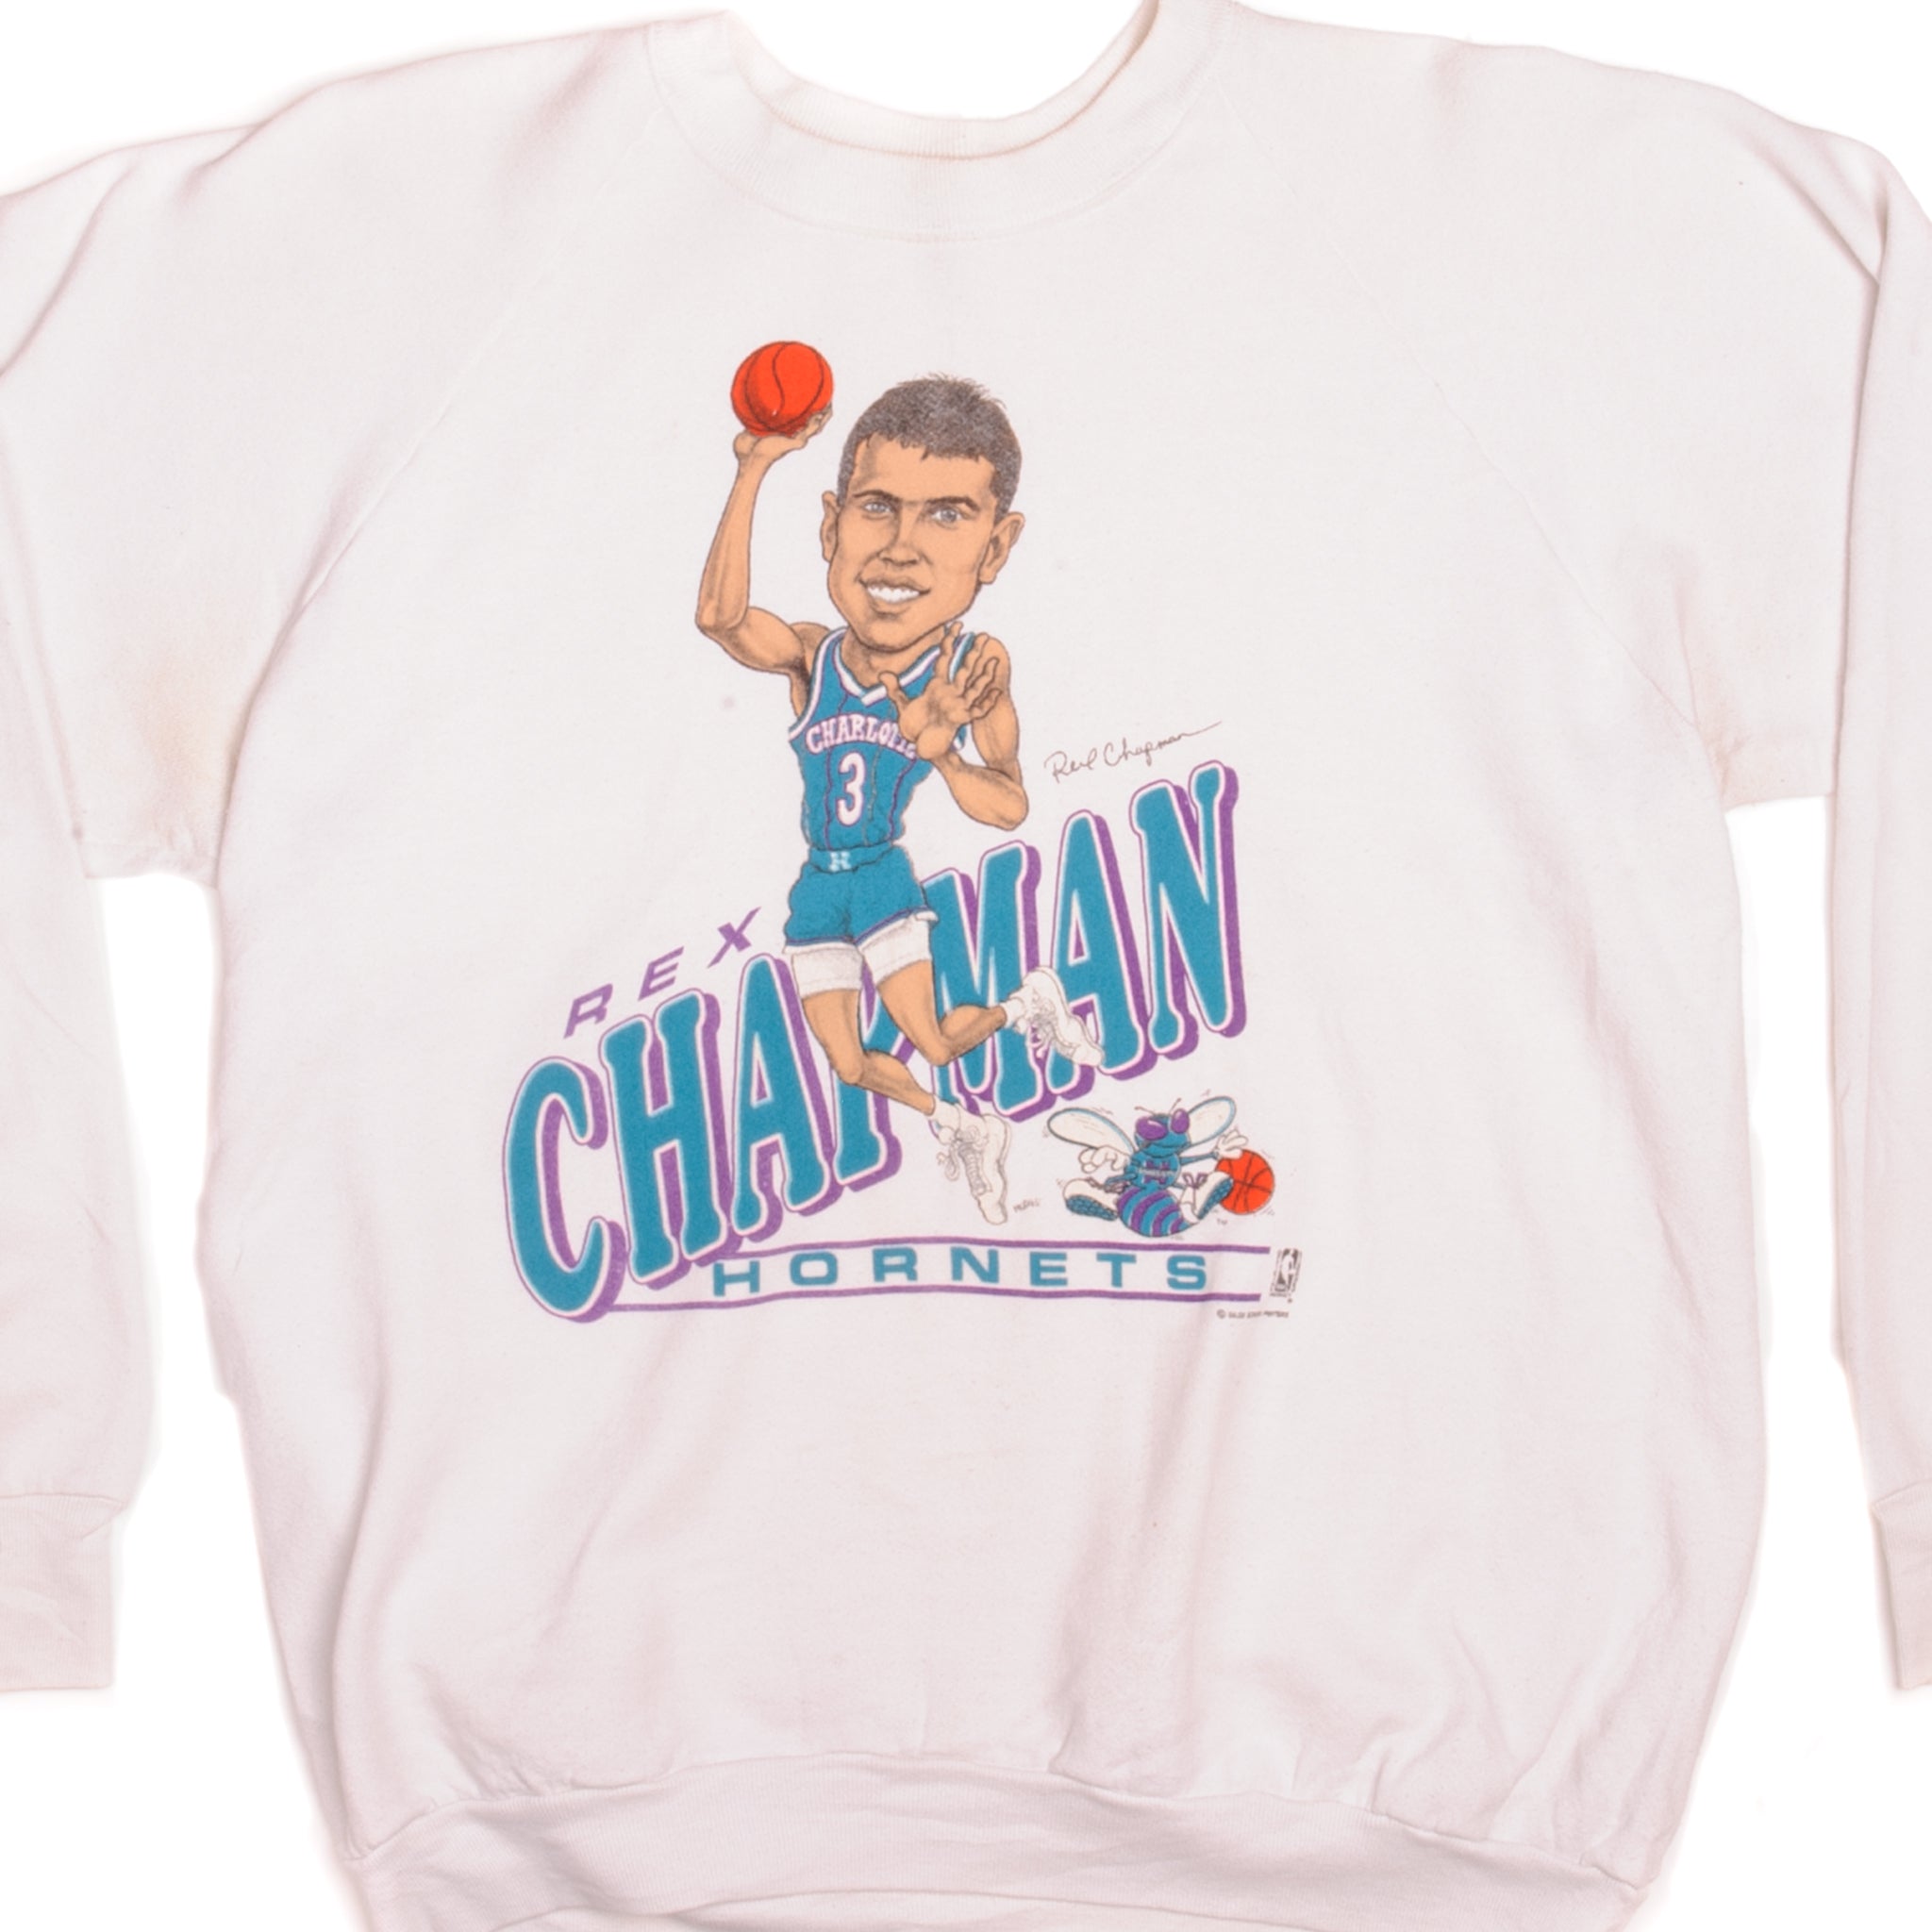 NBA Jam Charlotte Hornets Ball And Rozier Shirt, hoodie, sweater